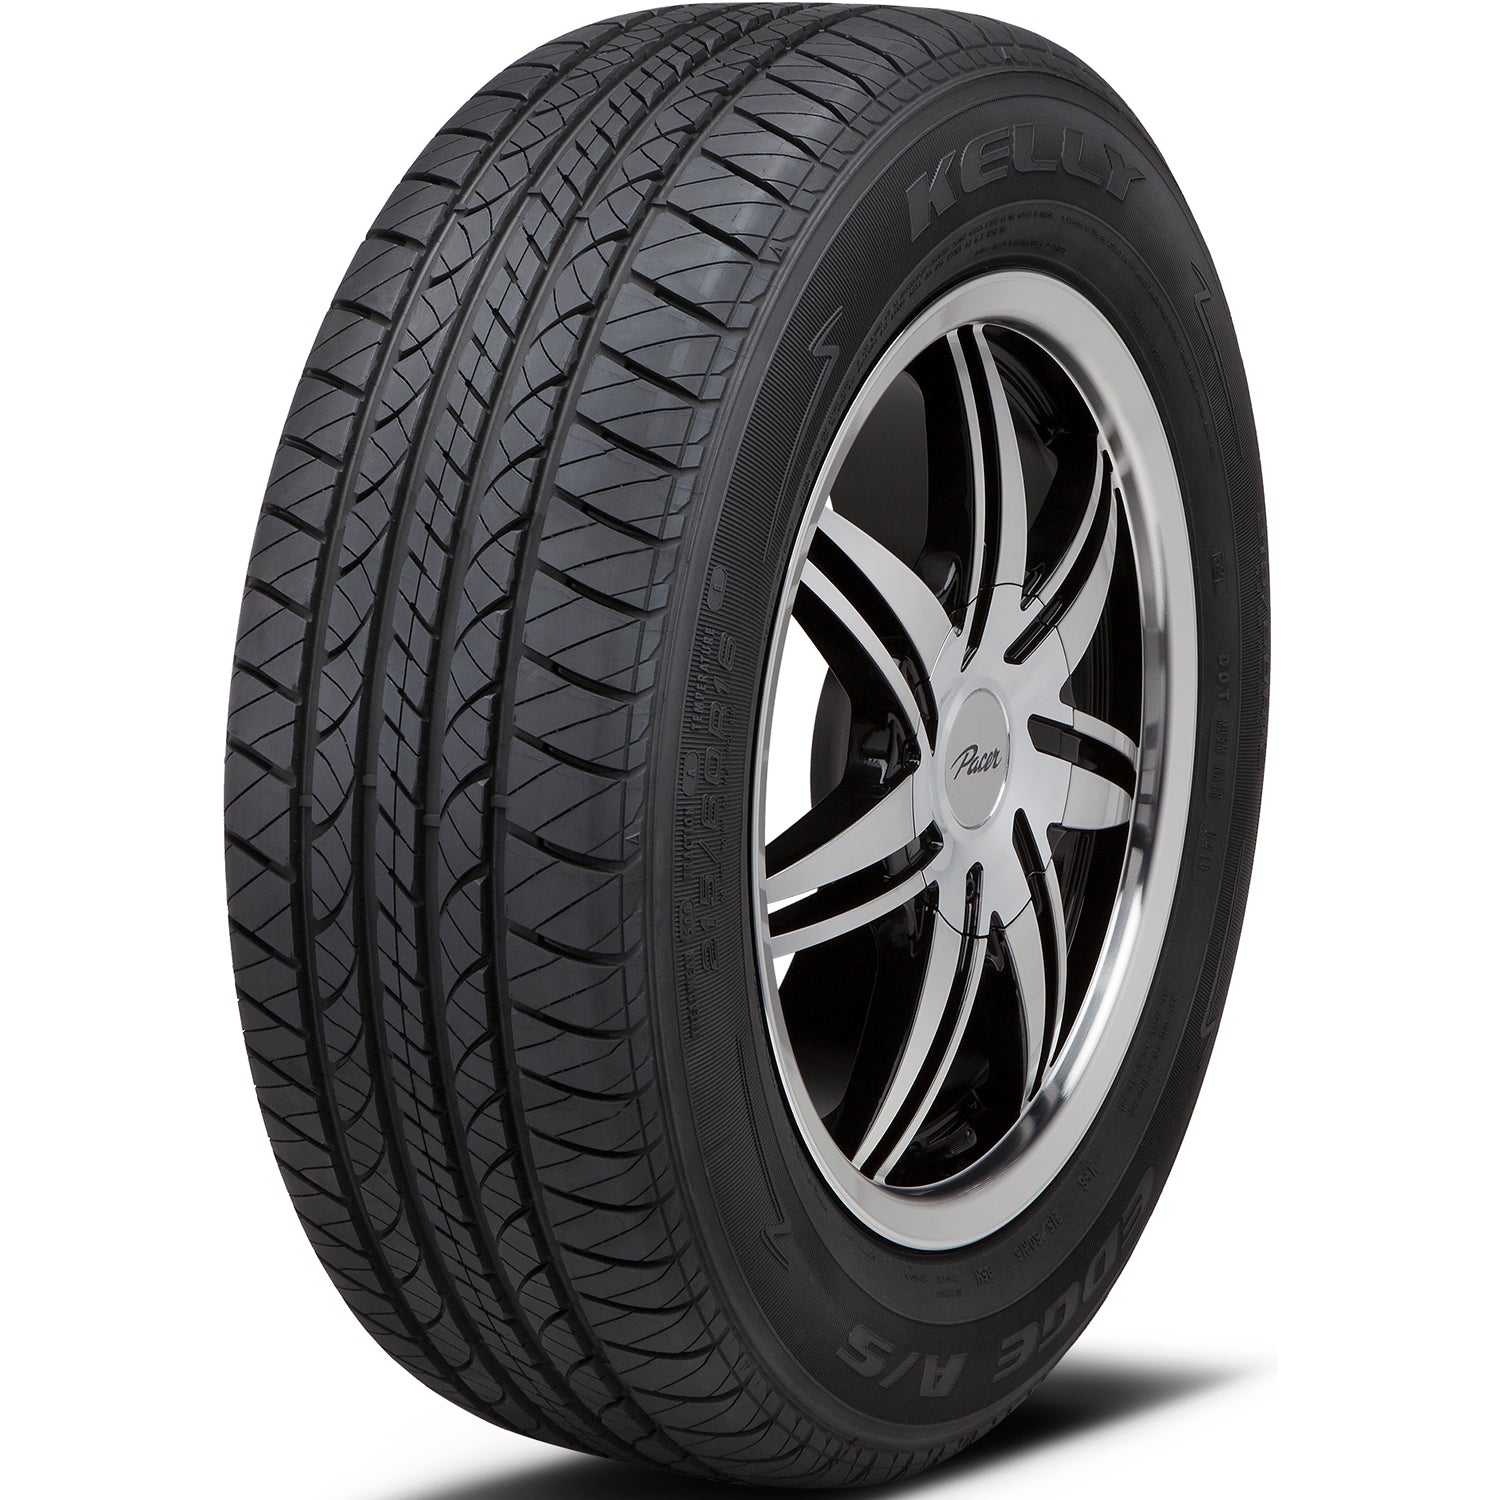 KELLY EDGE AS 215/60R15 (25.2X8.7R 15) Tires